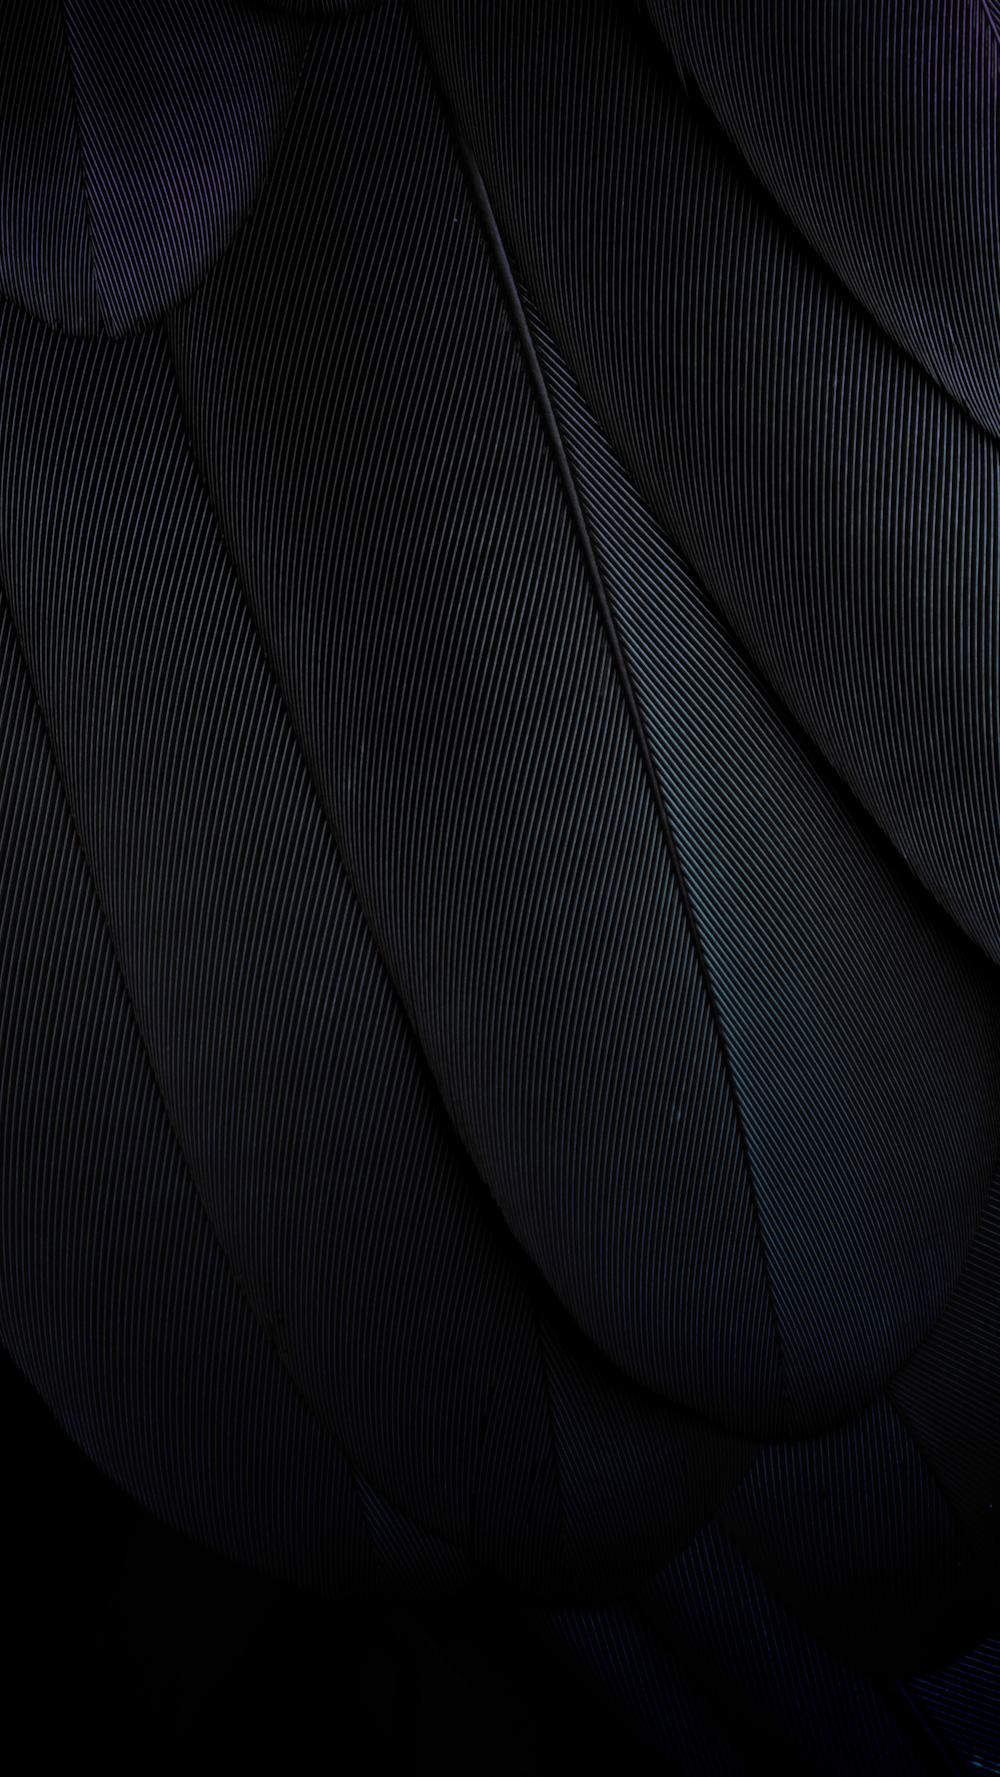 Wet Dark Feather HD Photography Wallpaper 129